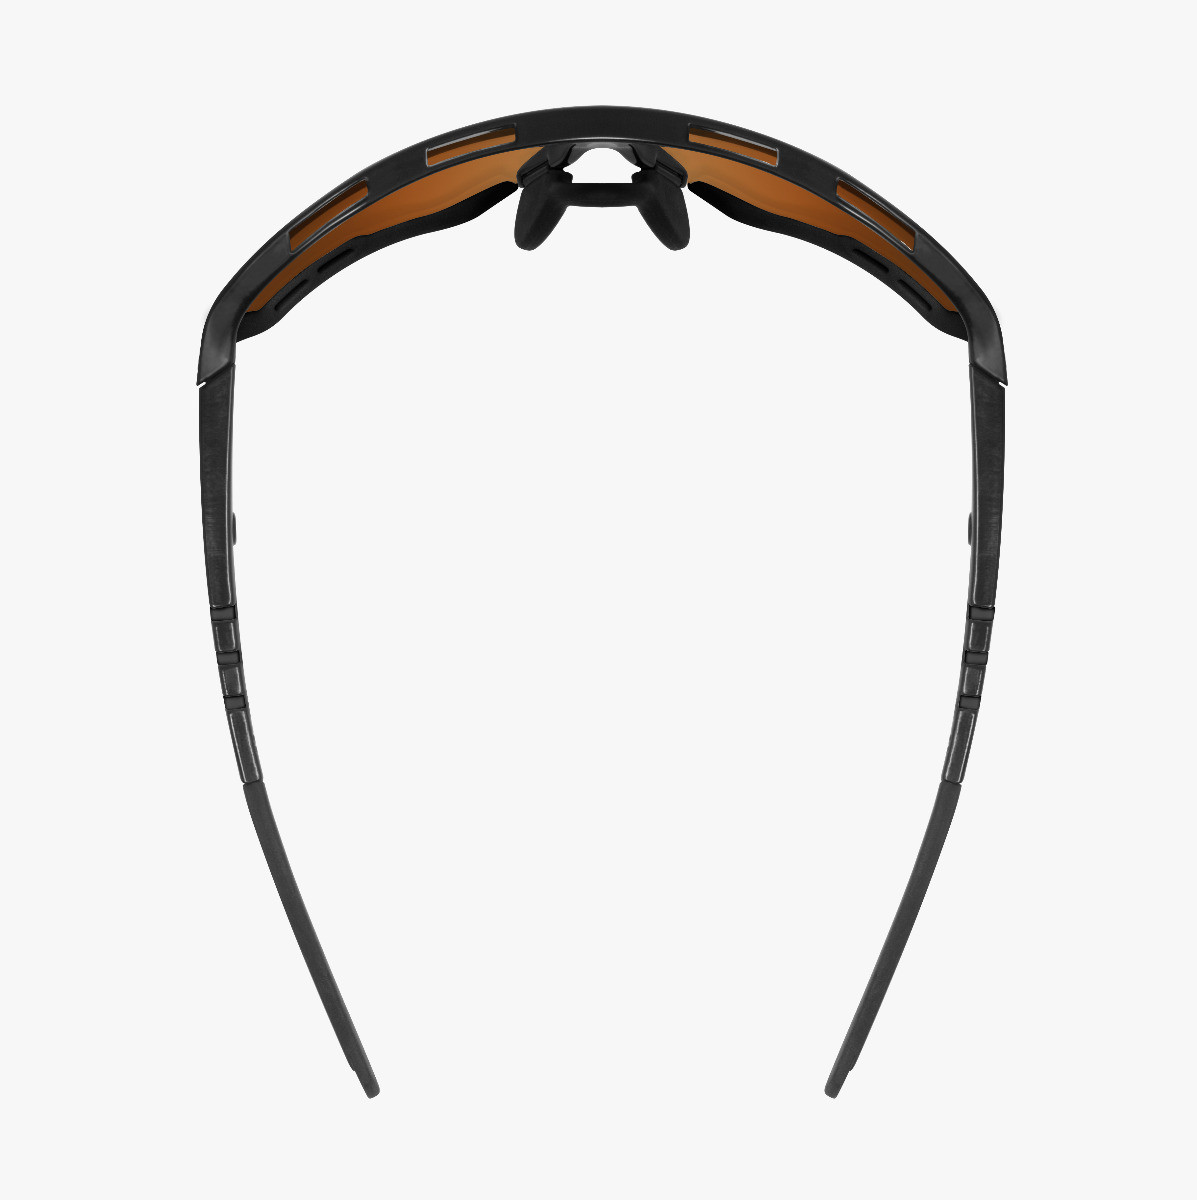 Aerocomfort cycling sunglasses scnxt photochromic black frame bronze lenses EY19170201
